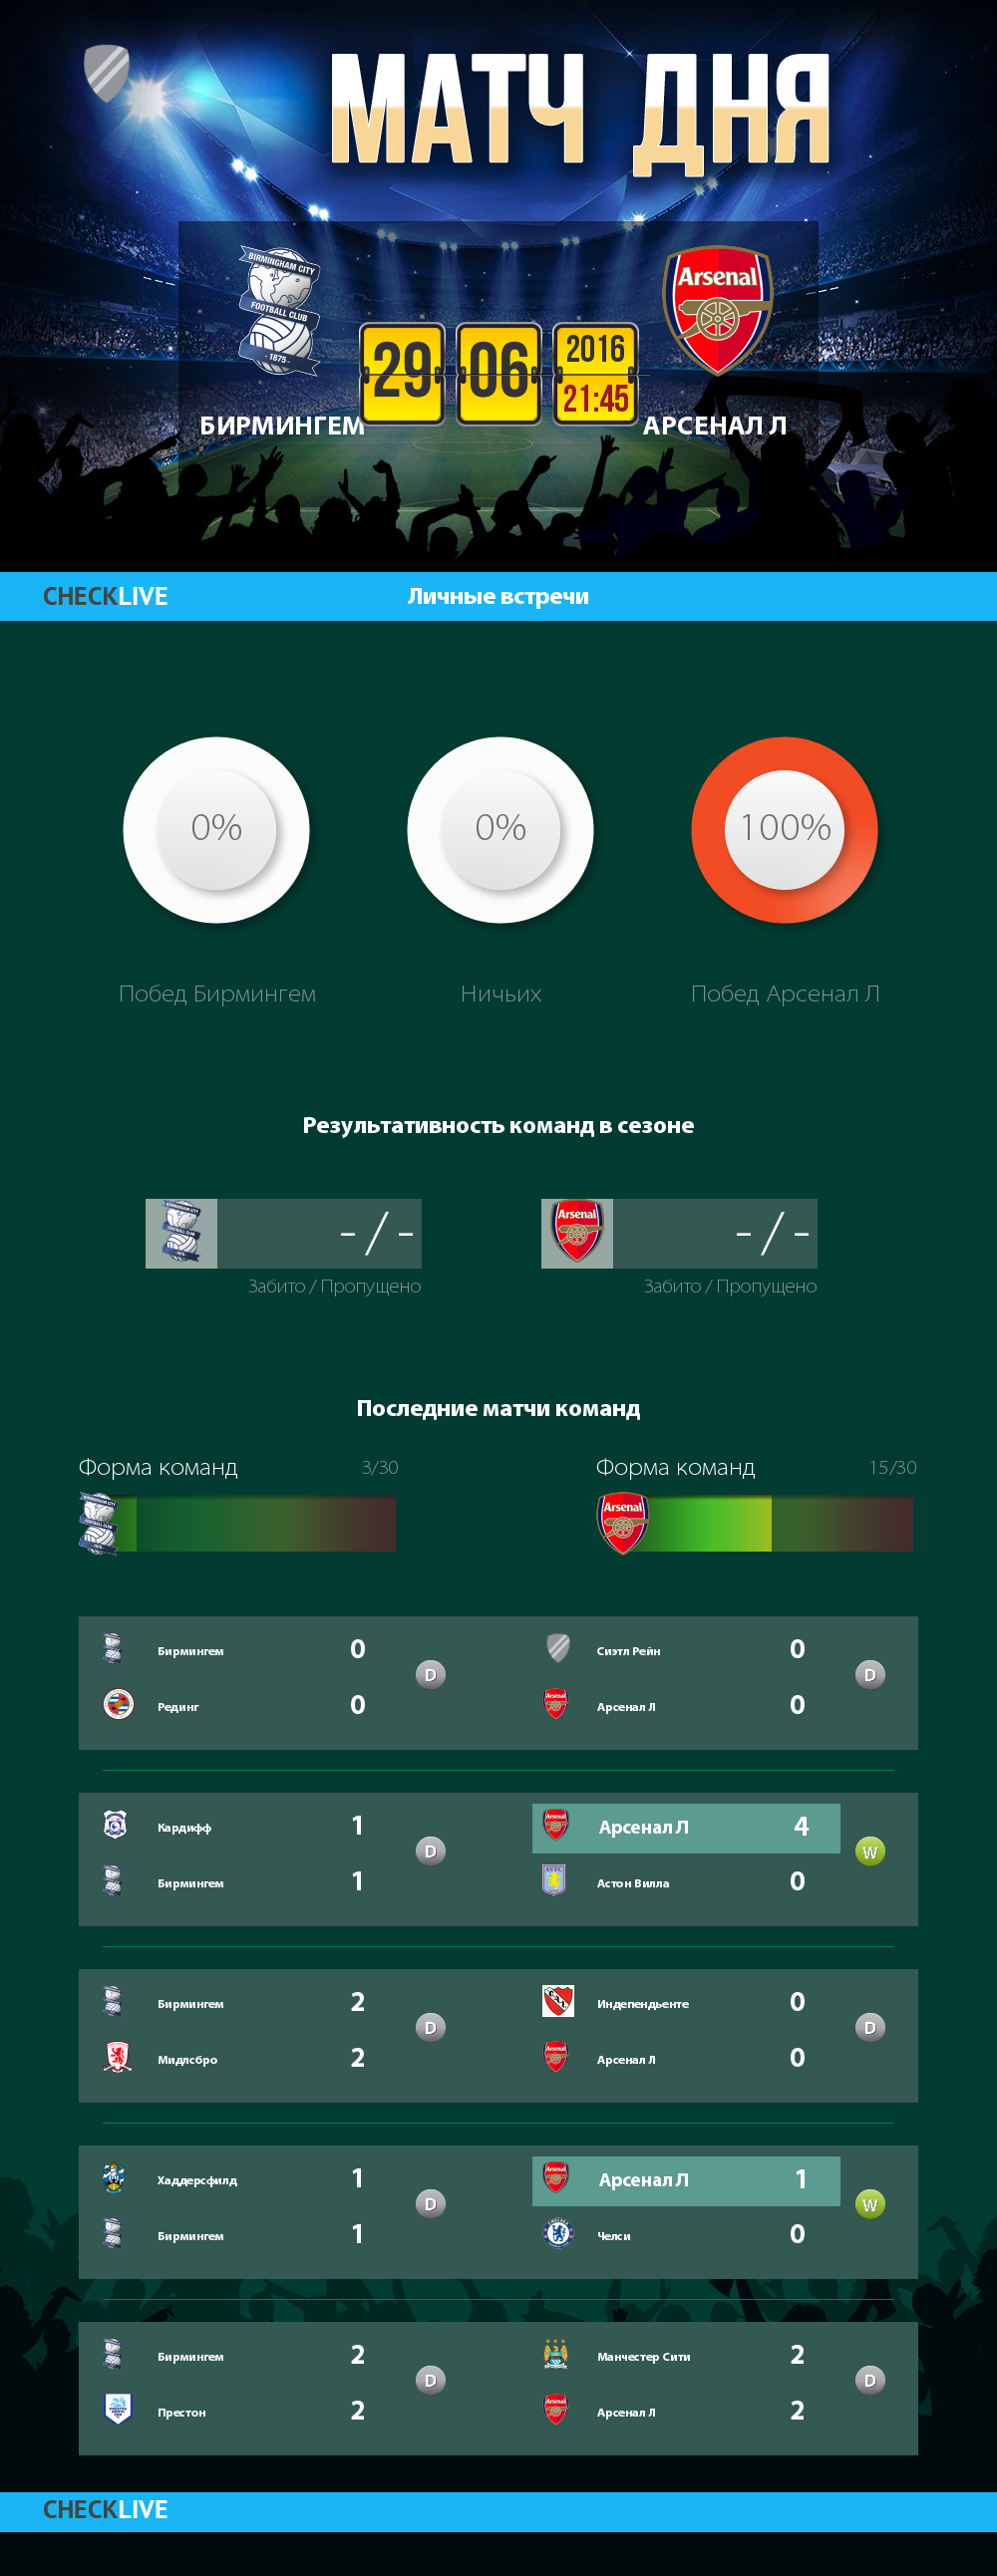 Инфографика Бирмингем и Арсенал Л матч дня 29.06.2016